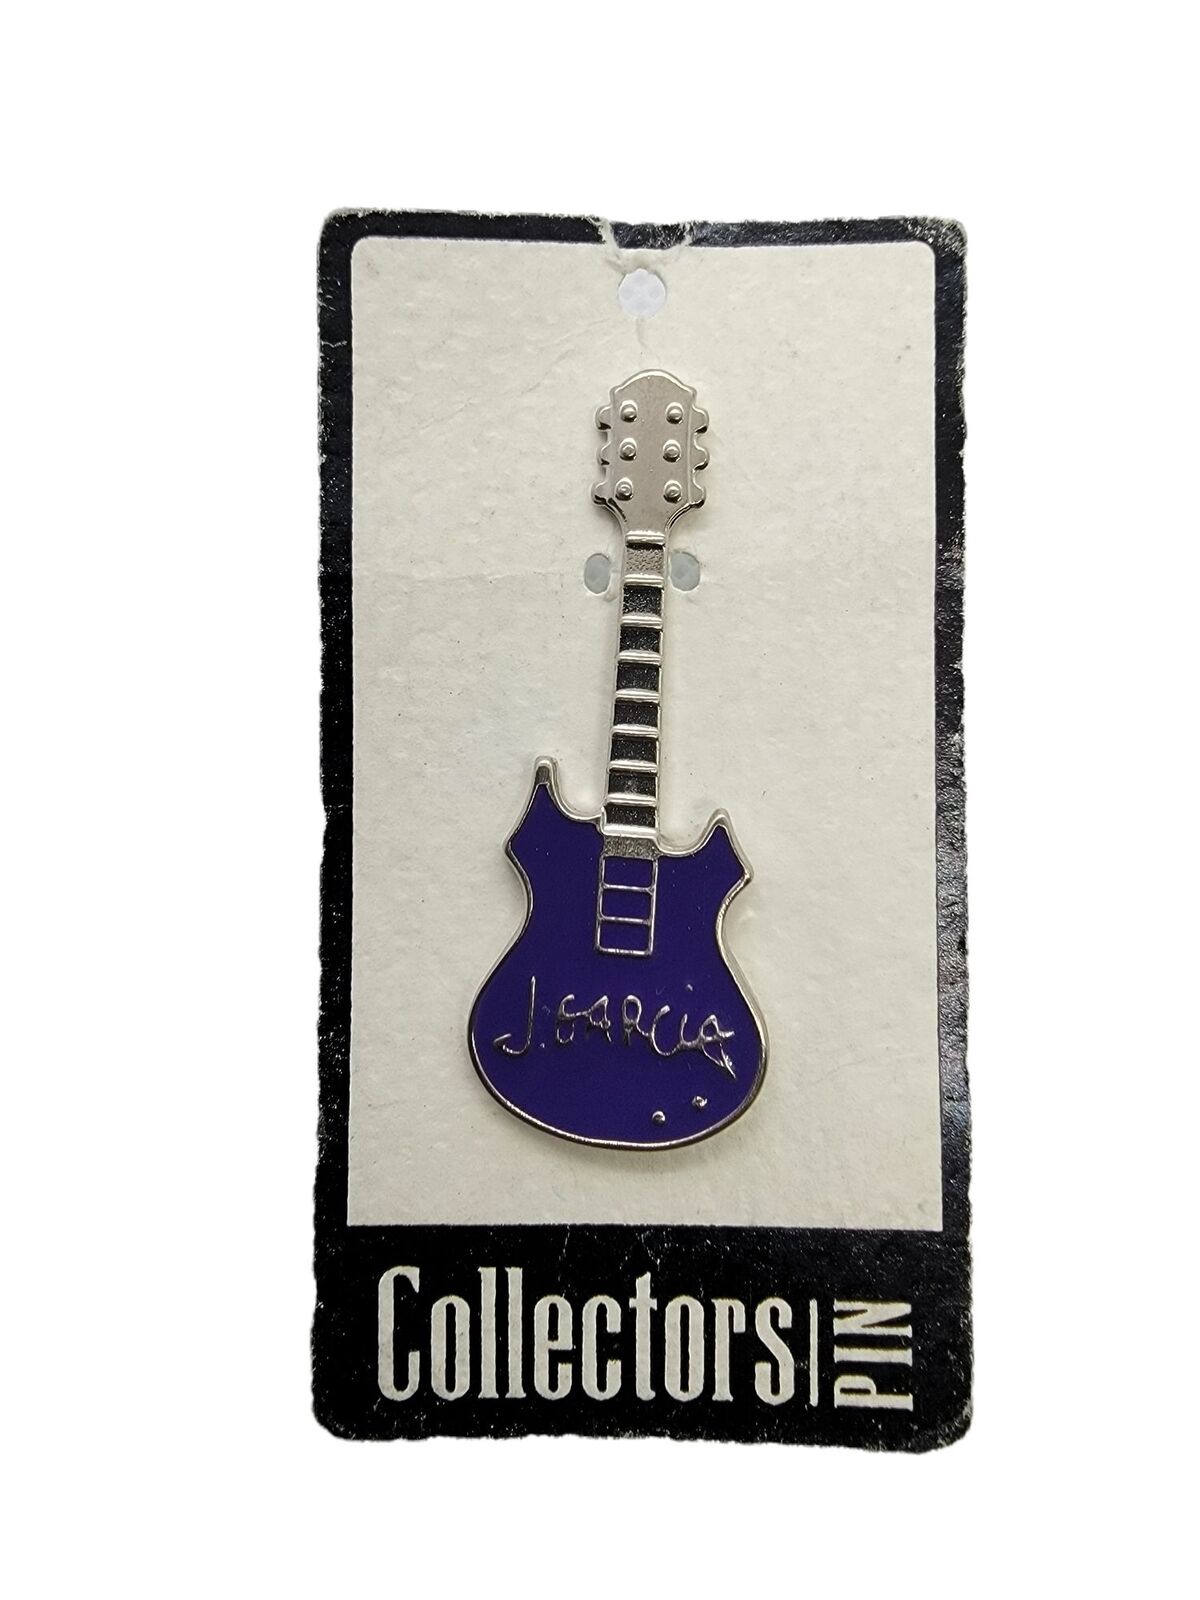 J Jerry Garcia Collector's Pin Purple Enamel Guitar Neck Tie Tack Pin